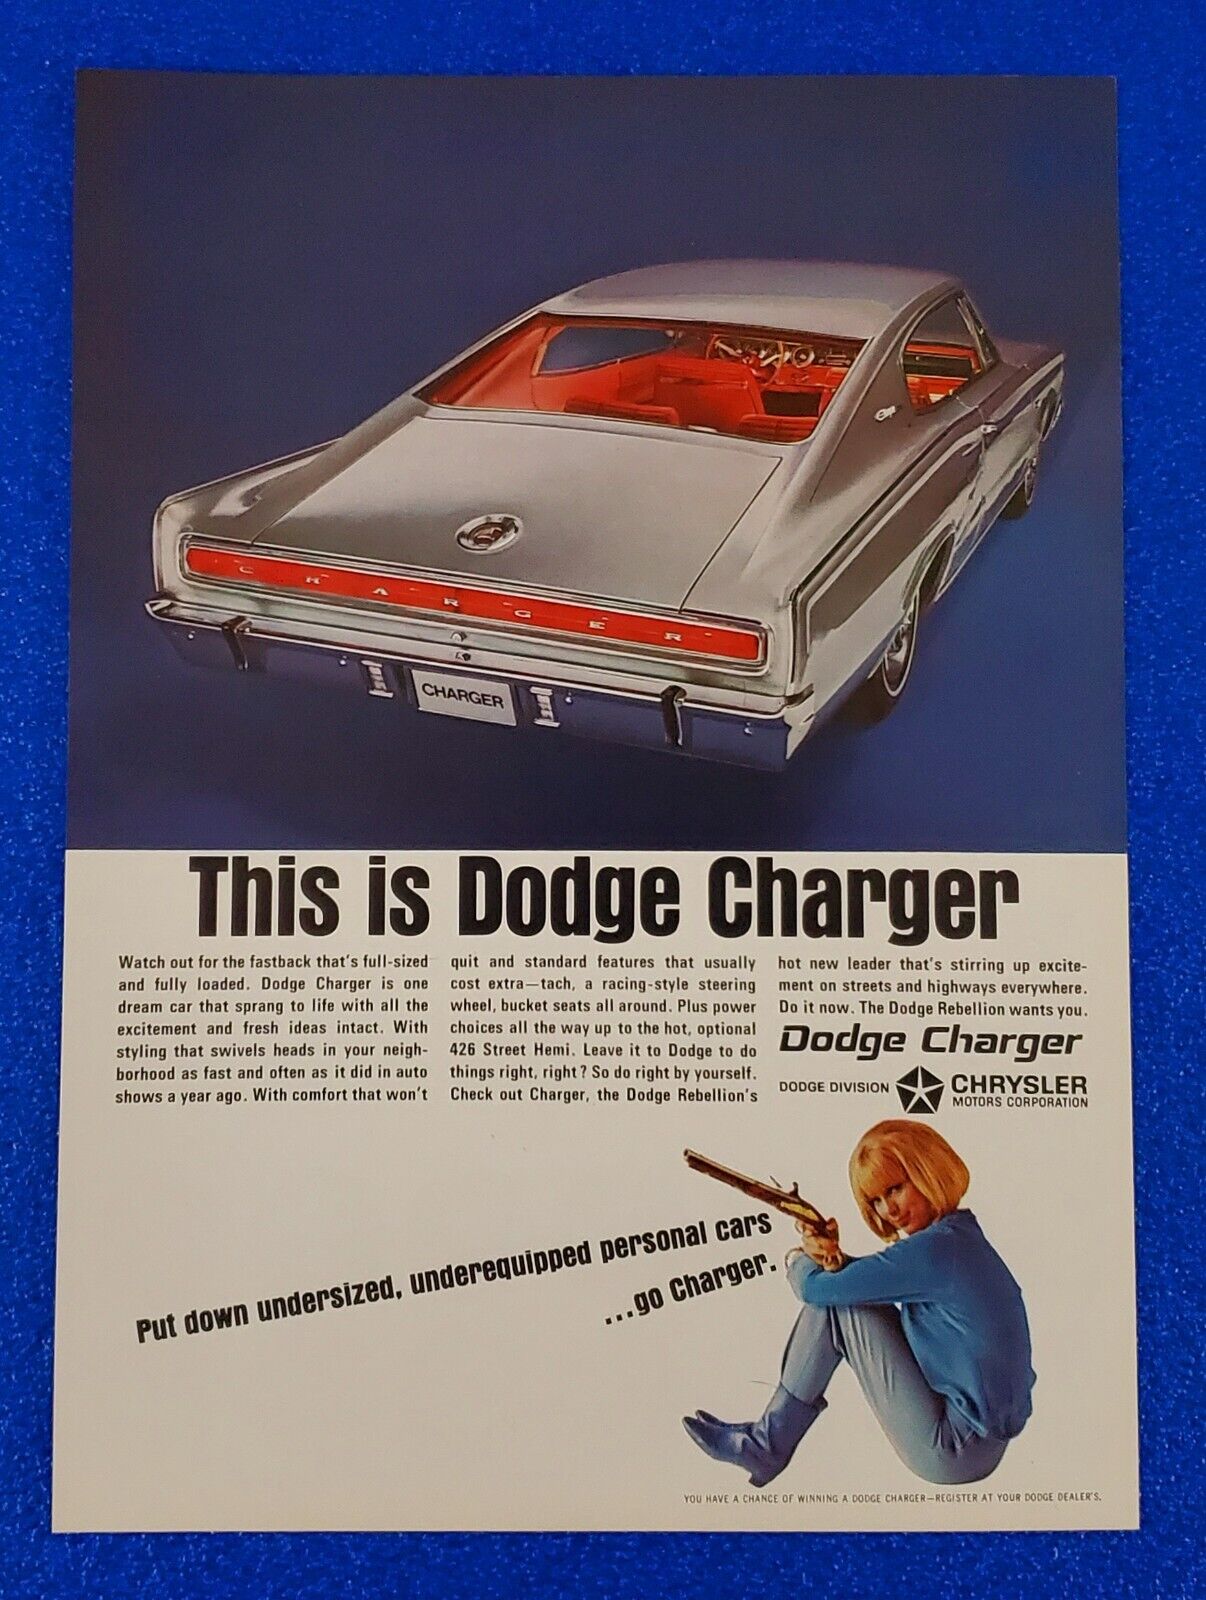 1966 DODGE CHARGER 426 STREET HEMI ORIGINAL COLOR CLASSIC PRINT AD SHIPS FREE